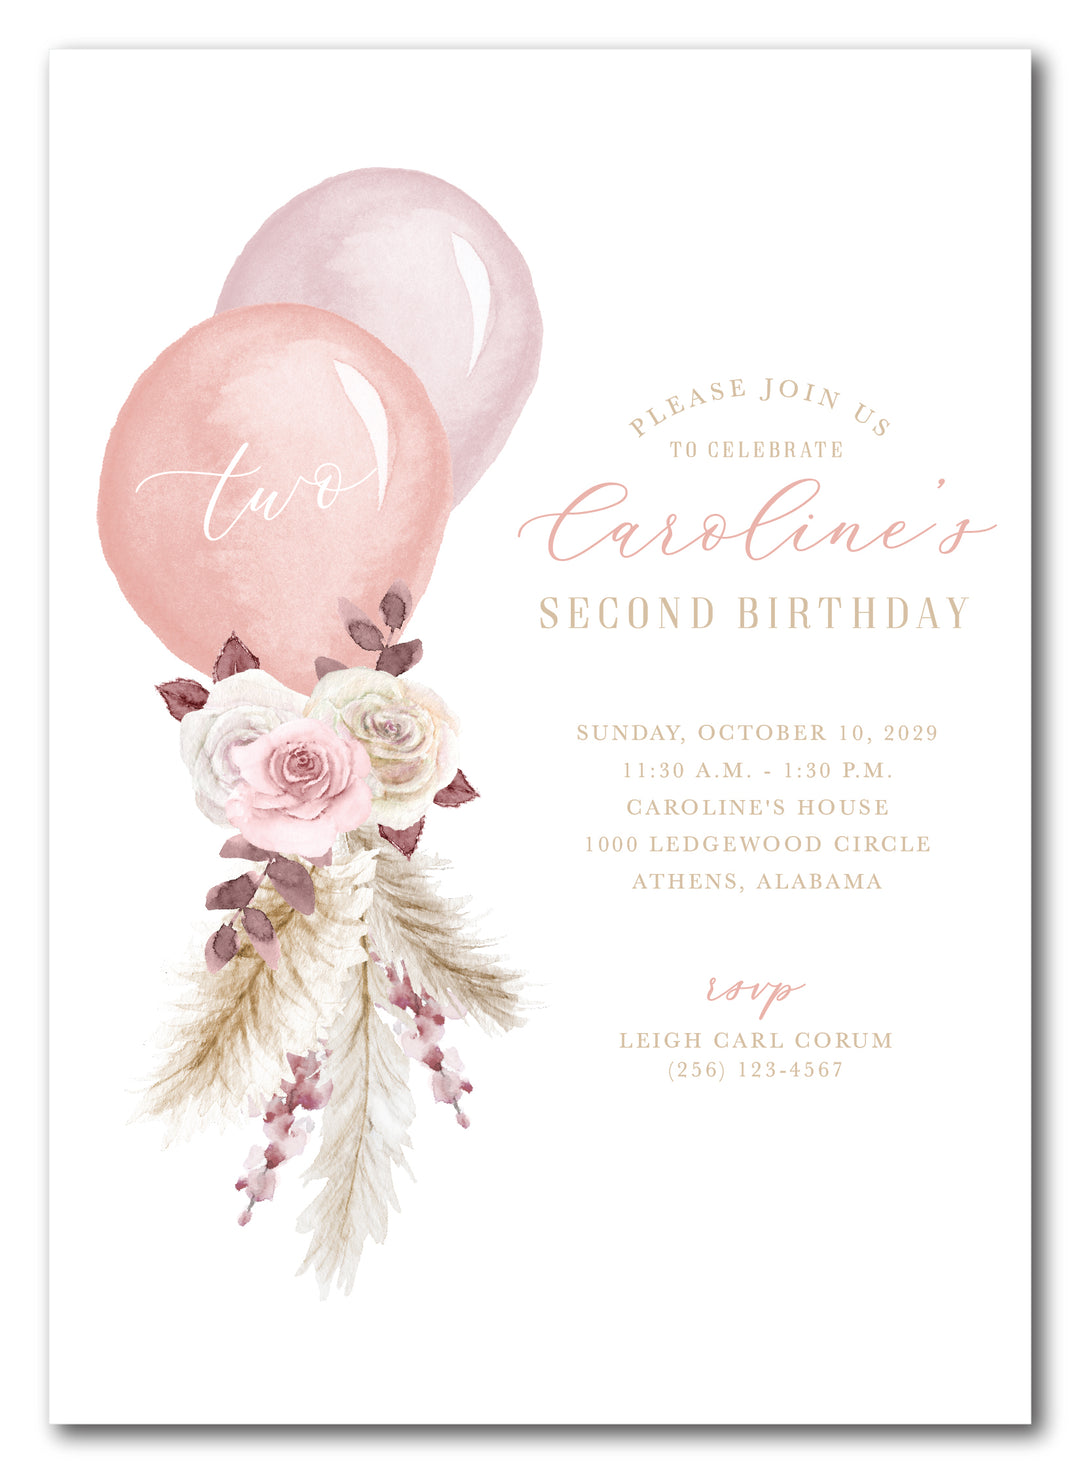 The Pampas Balloon Birthday Party Invitation